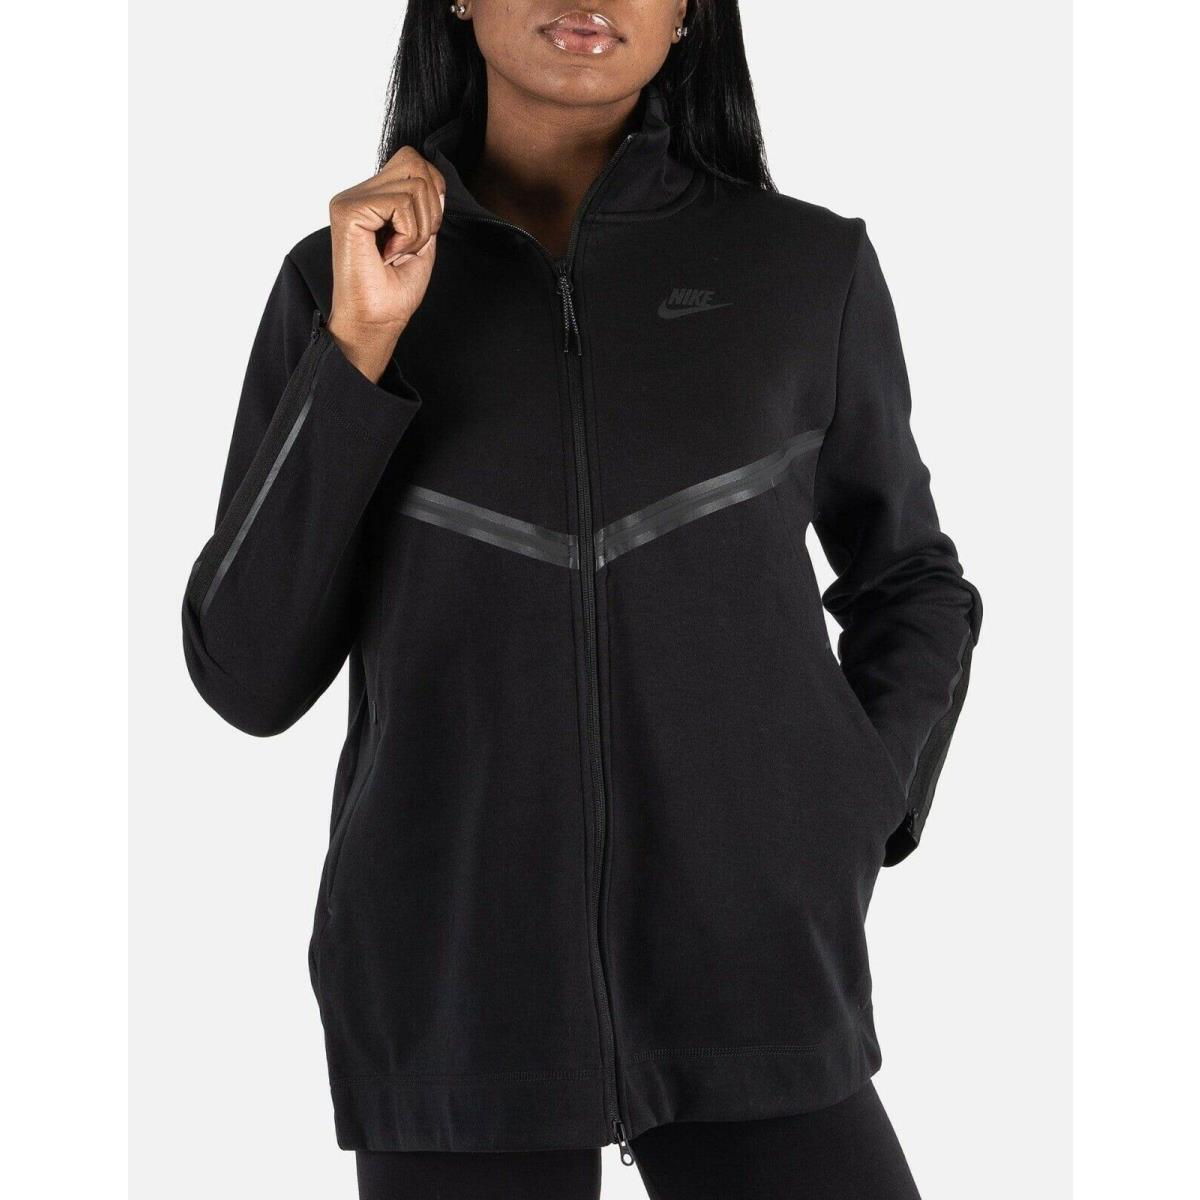 Nike Women`s Tech Fleece Insulated Jacket CW4296-010 Size Small